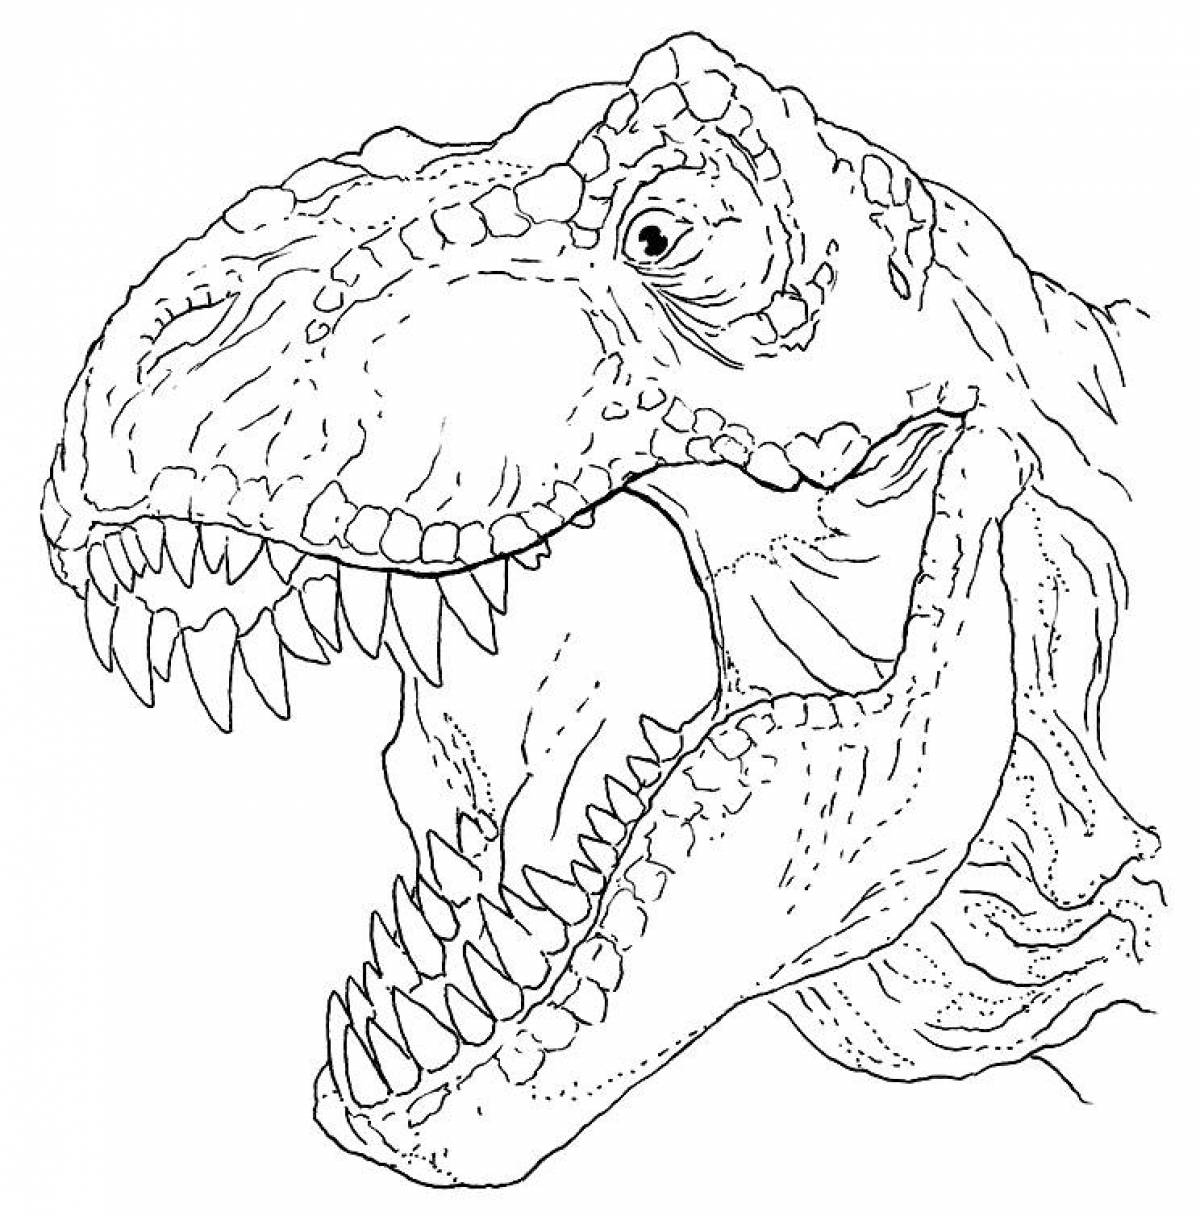 Terrible dinosaur rex coloring book